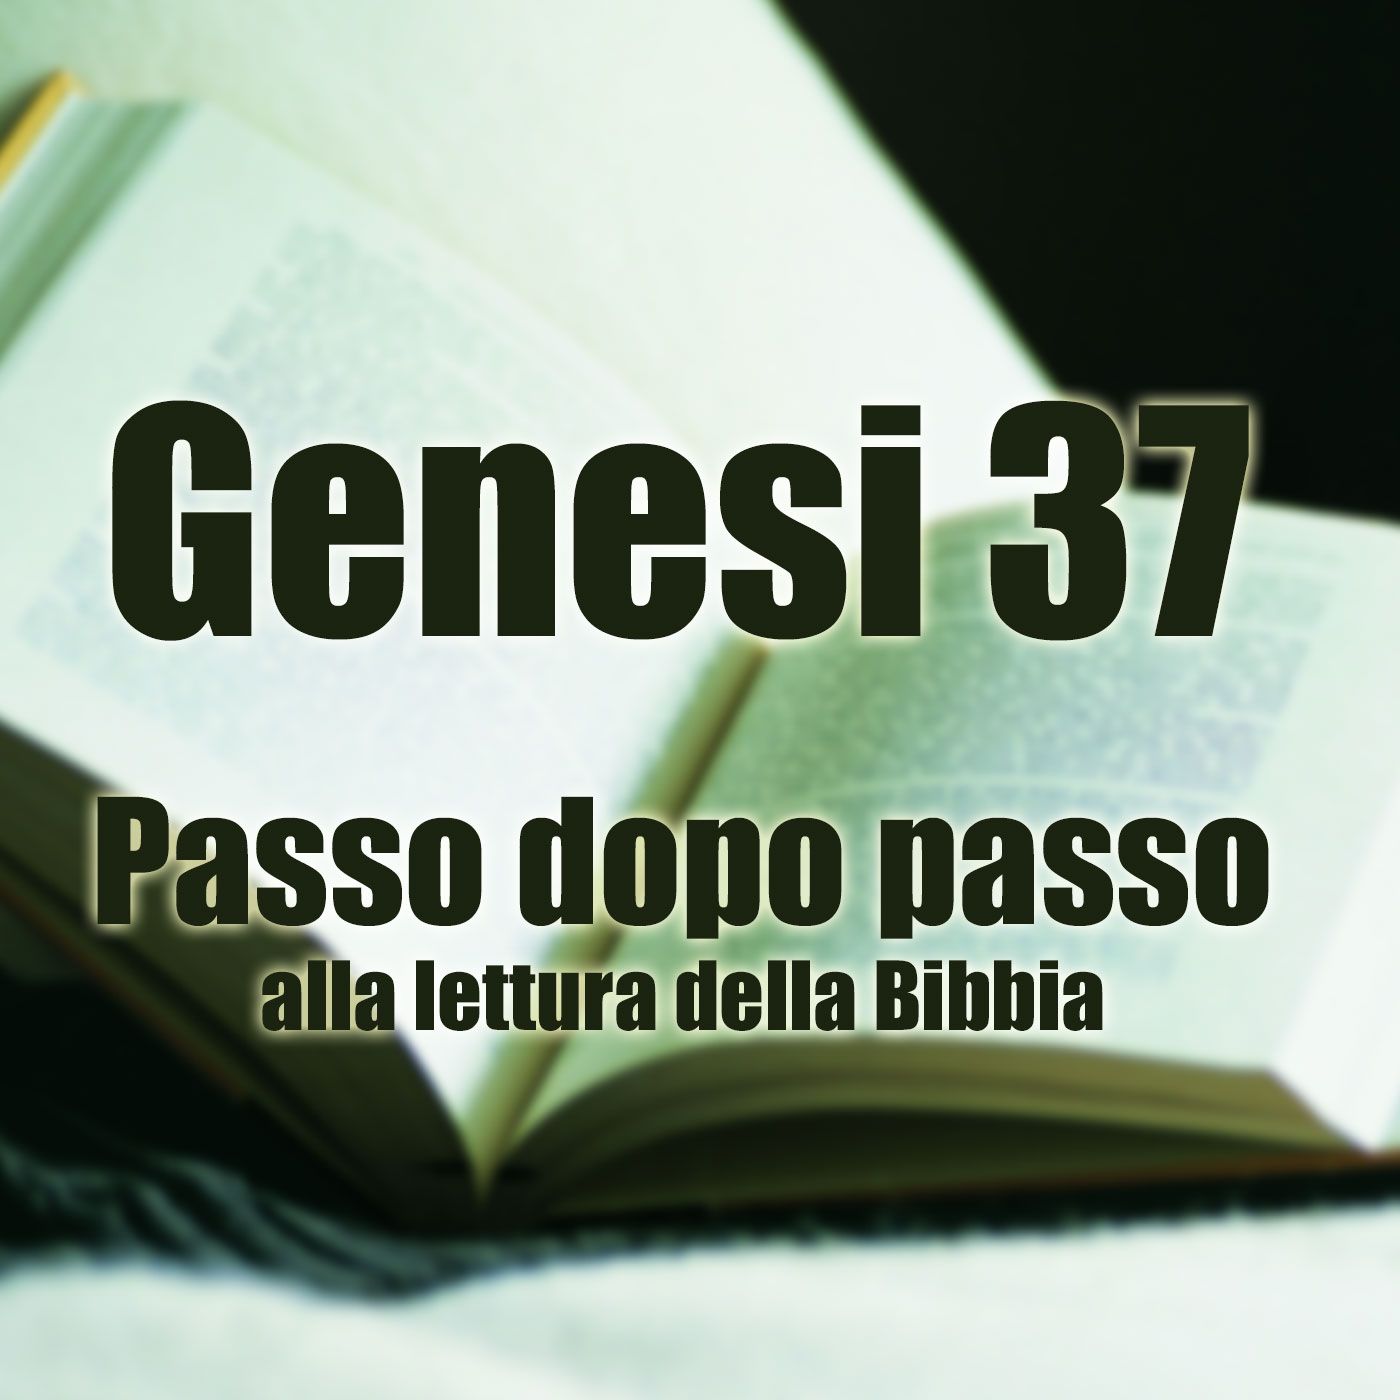 Genesi capitolo 37